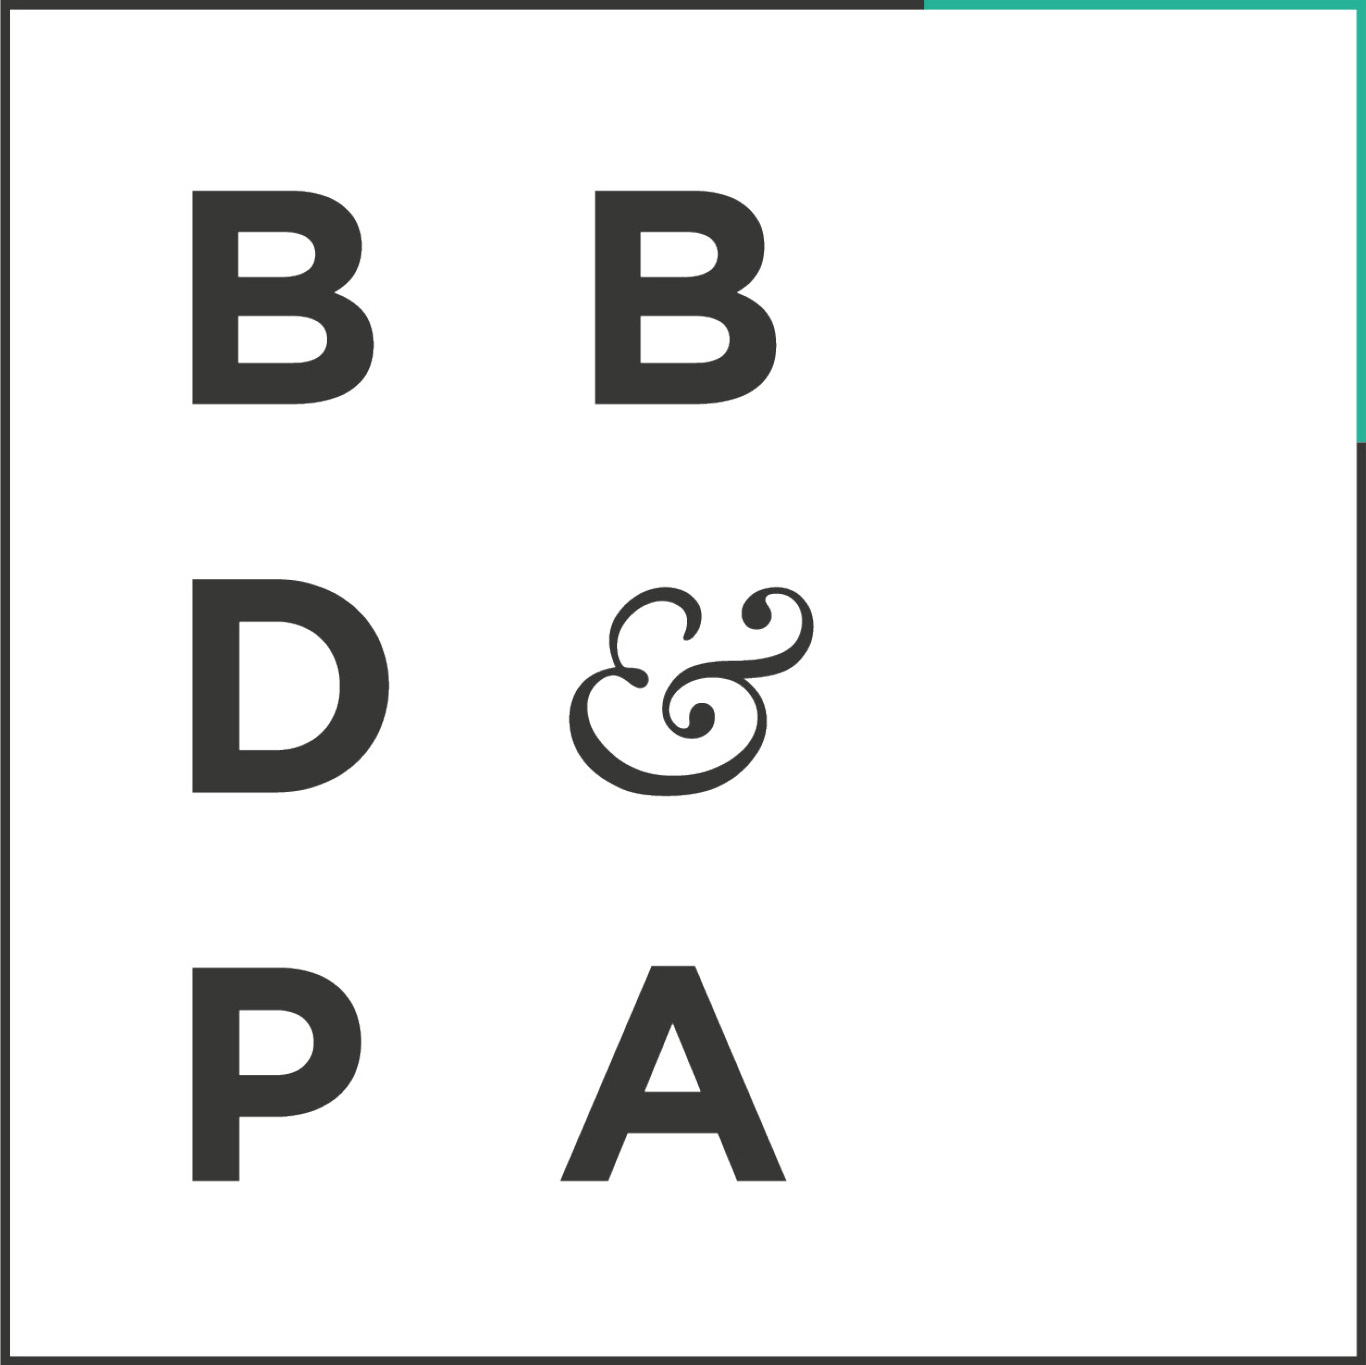 BBaPA logo